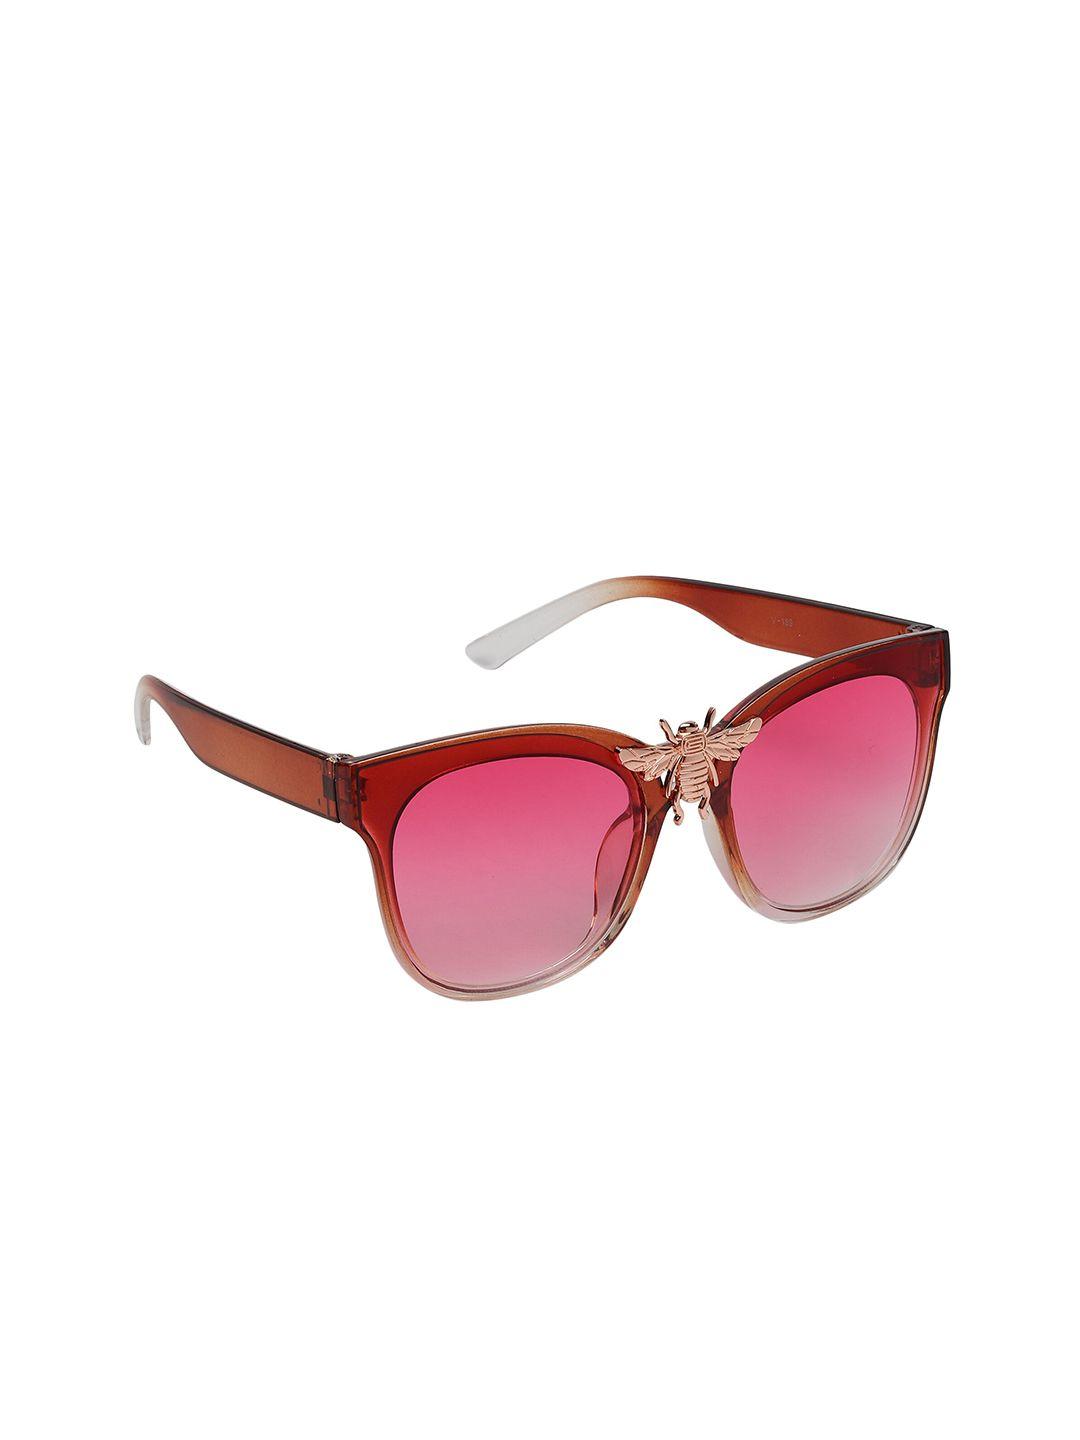 celebrity sunglasses unisex pink rectangular sunglasses cl-if-nora-c-04